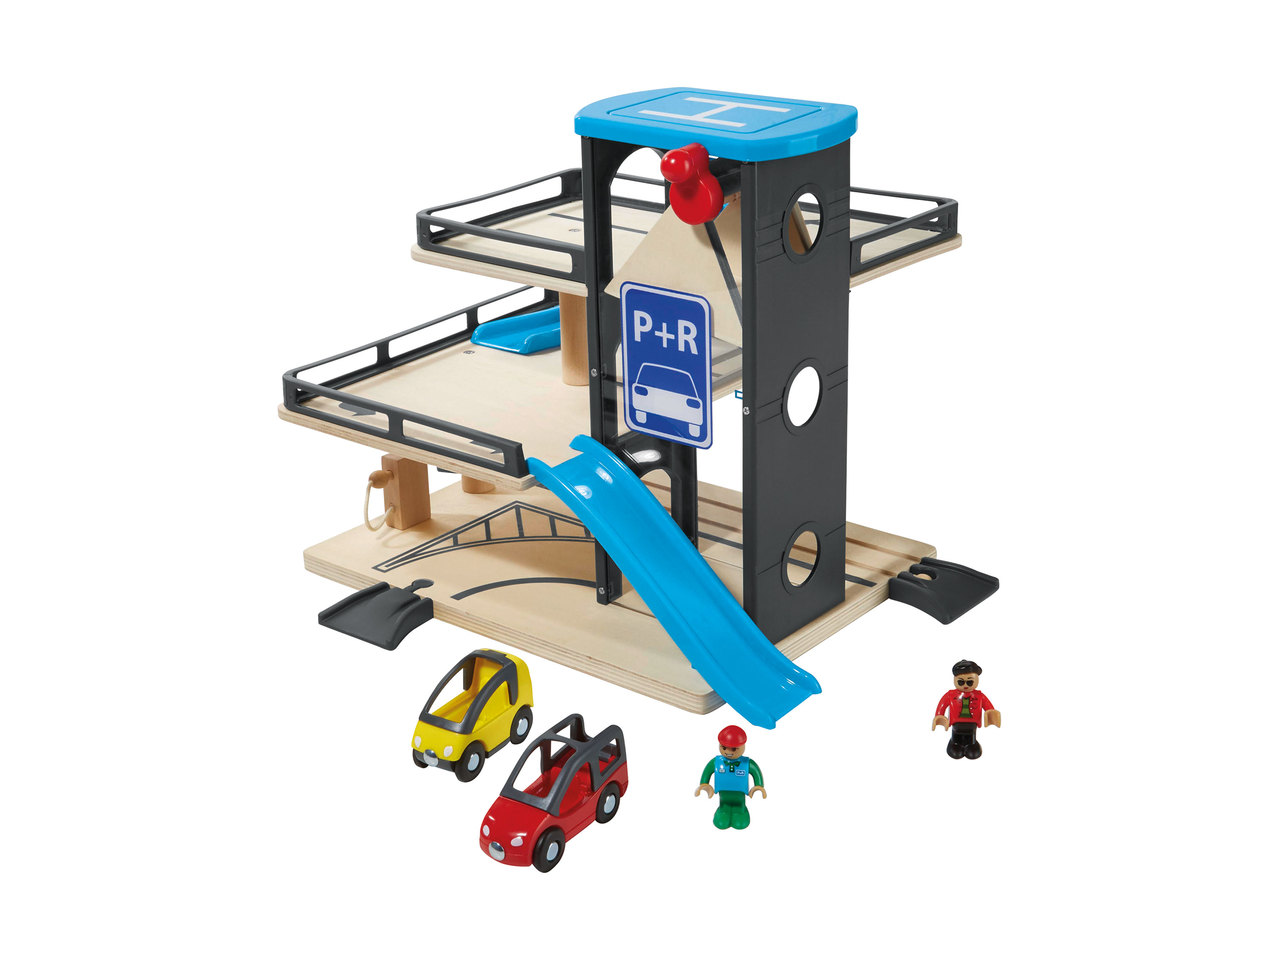 Playtive Junior Garage, Airport, Port or Track Expansion Set1